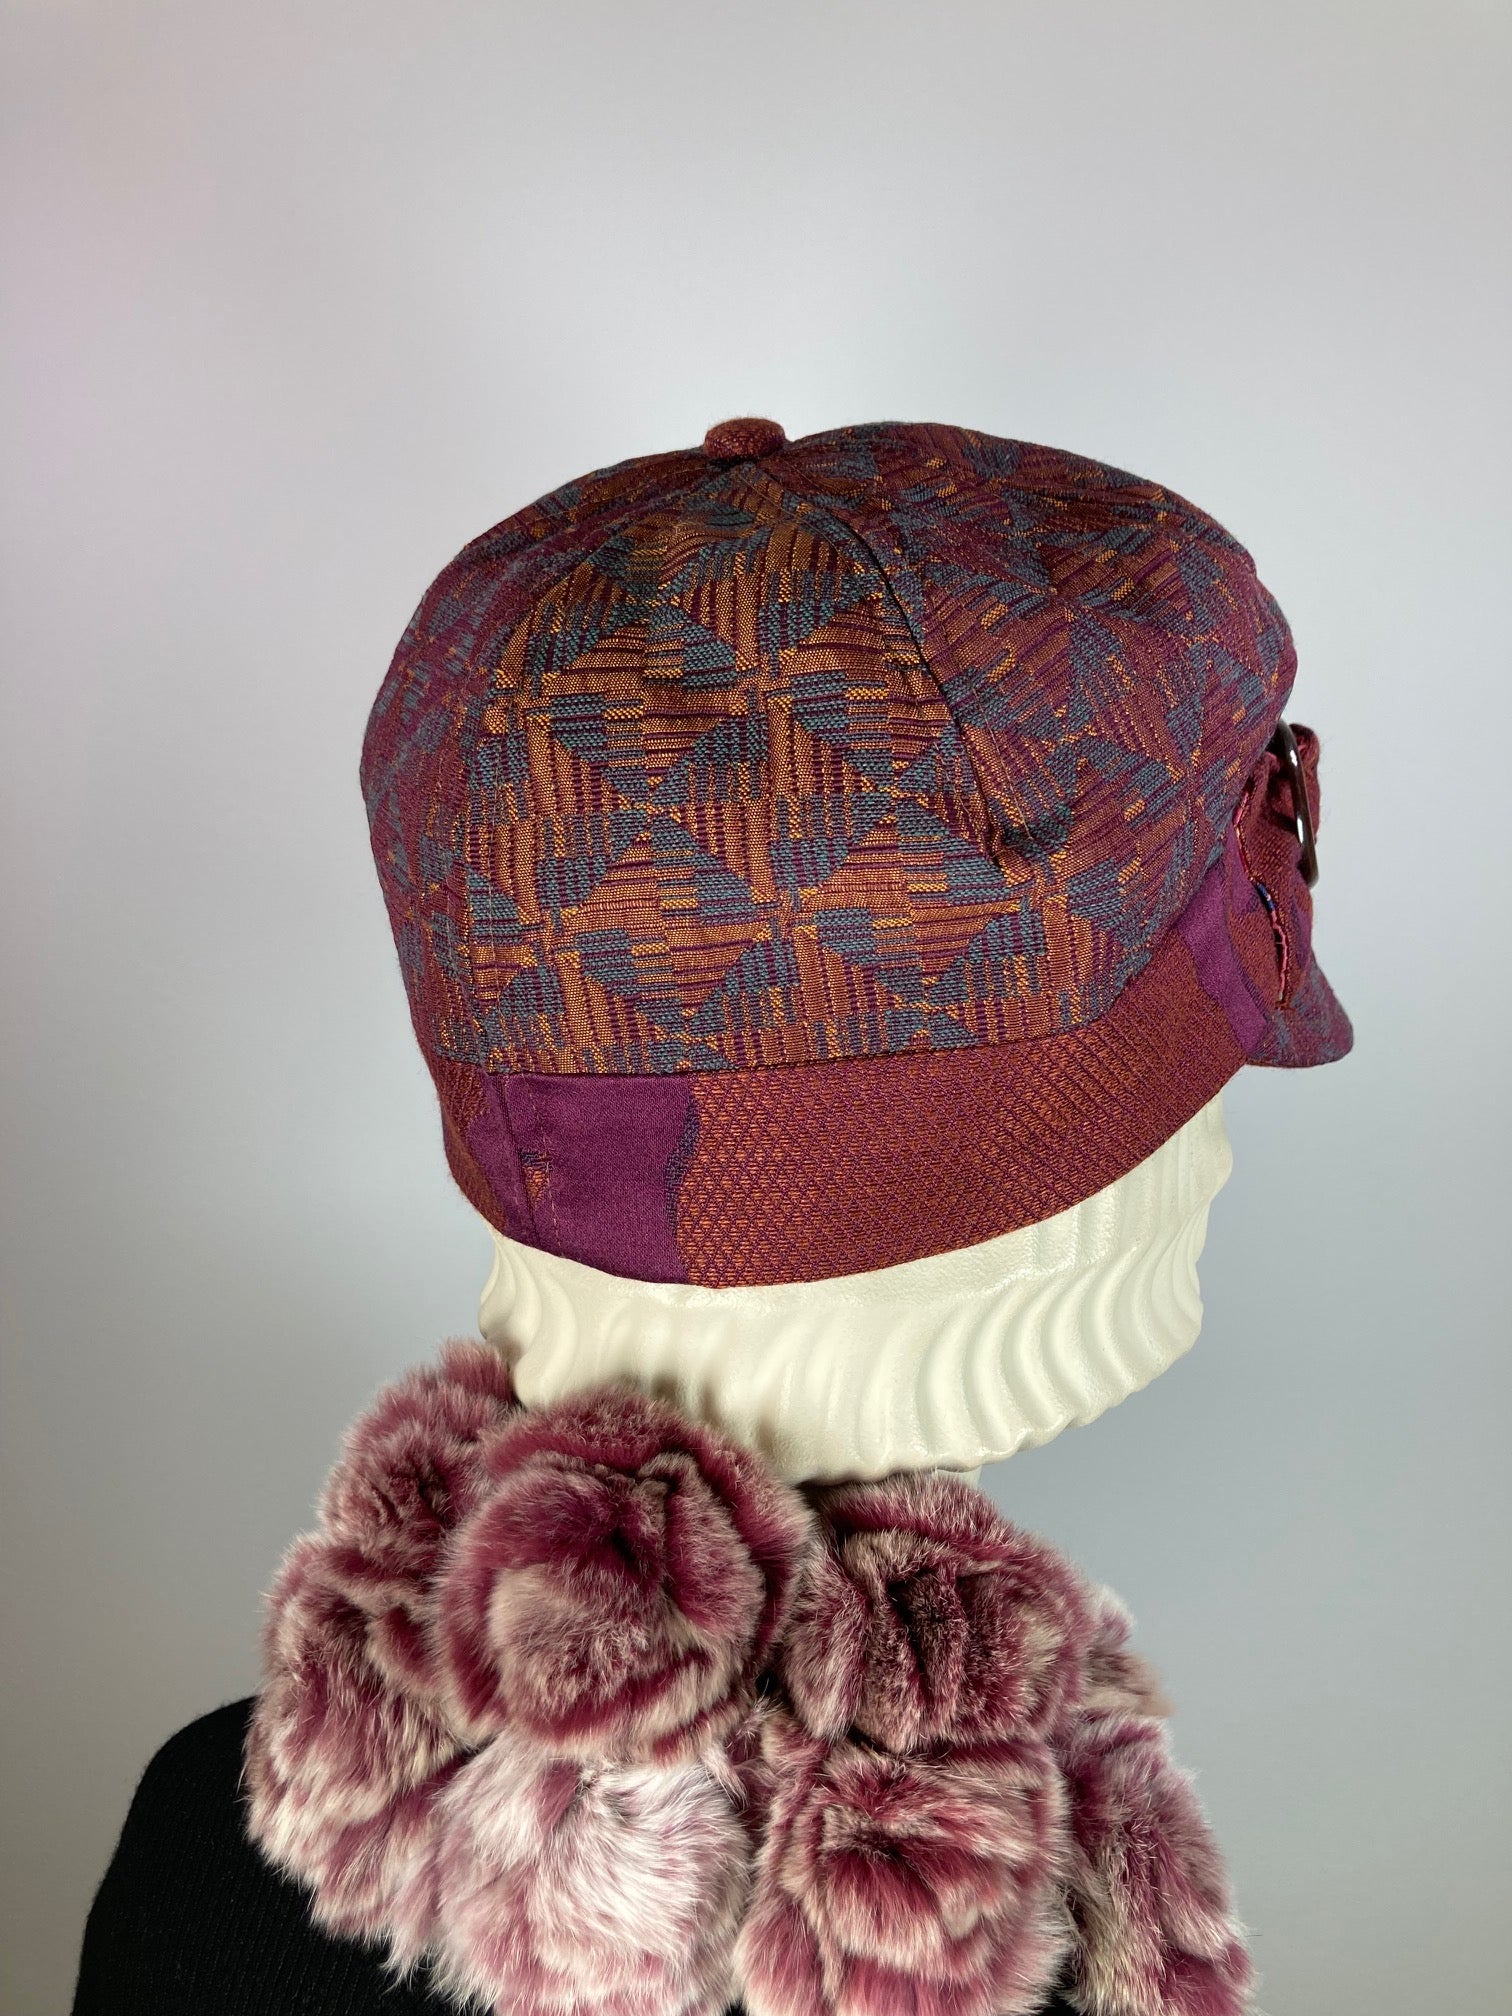 Women's Newsboy hat. Ladies baseball cap. Burgundy and teal fabric hat. Ladies unique newsboy baseball visor hat for winter.